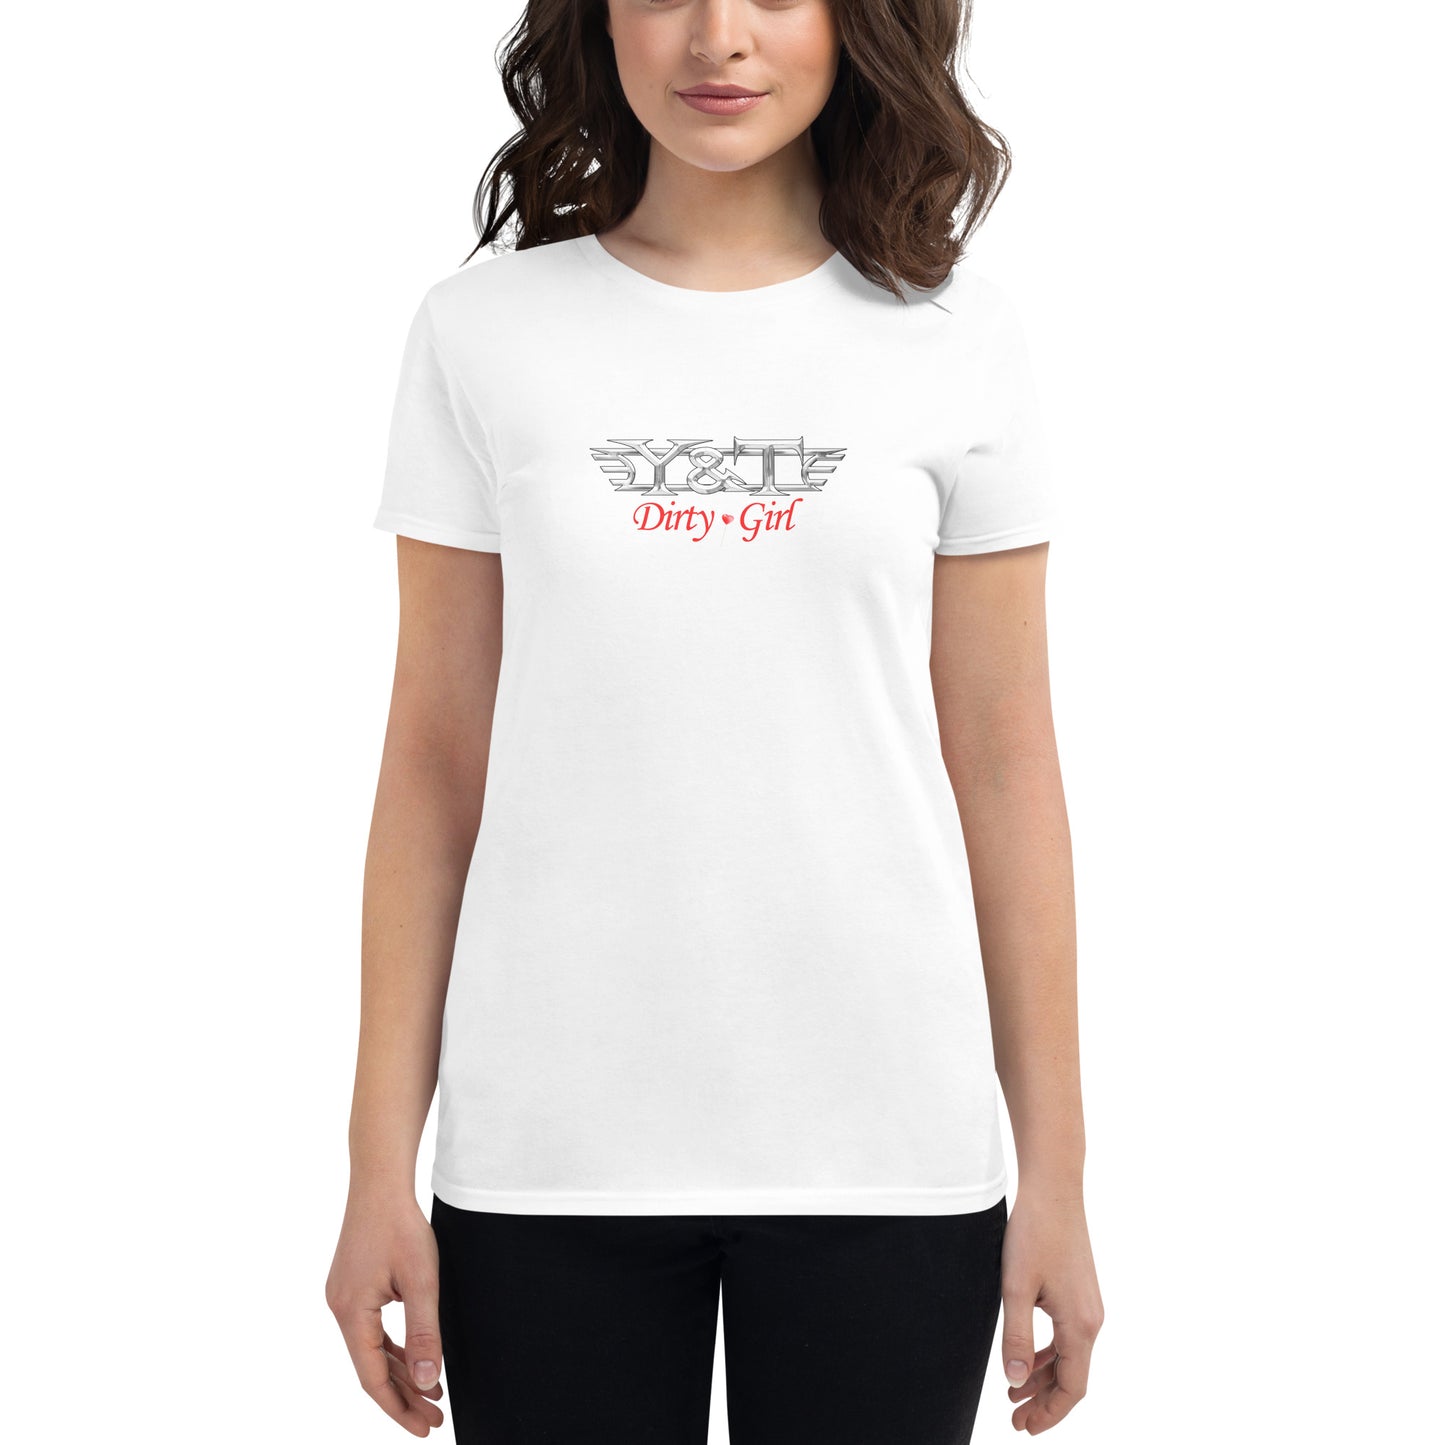 Y&T "Dirty Girl" Women’s Short Sleeve T-Shirt